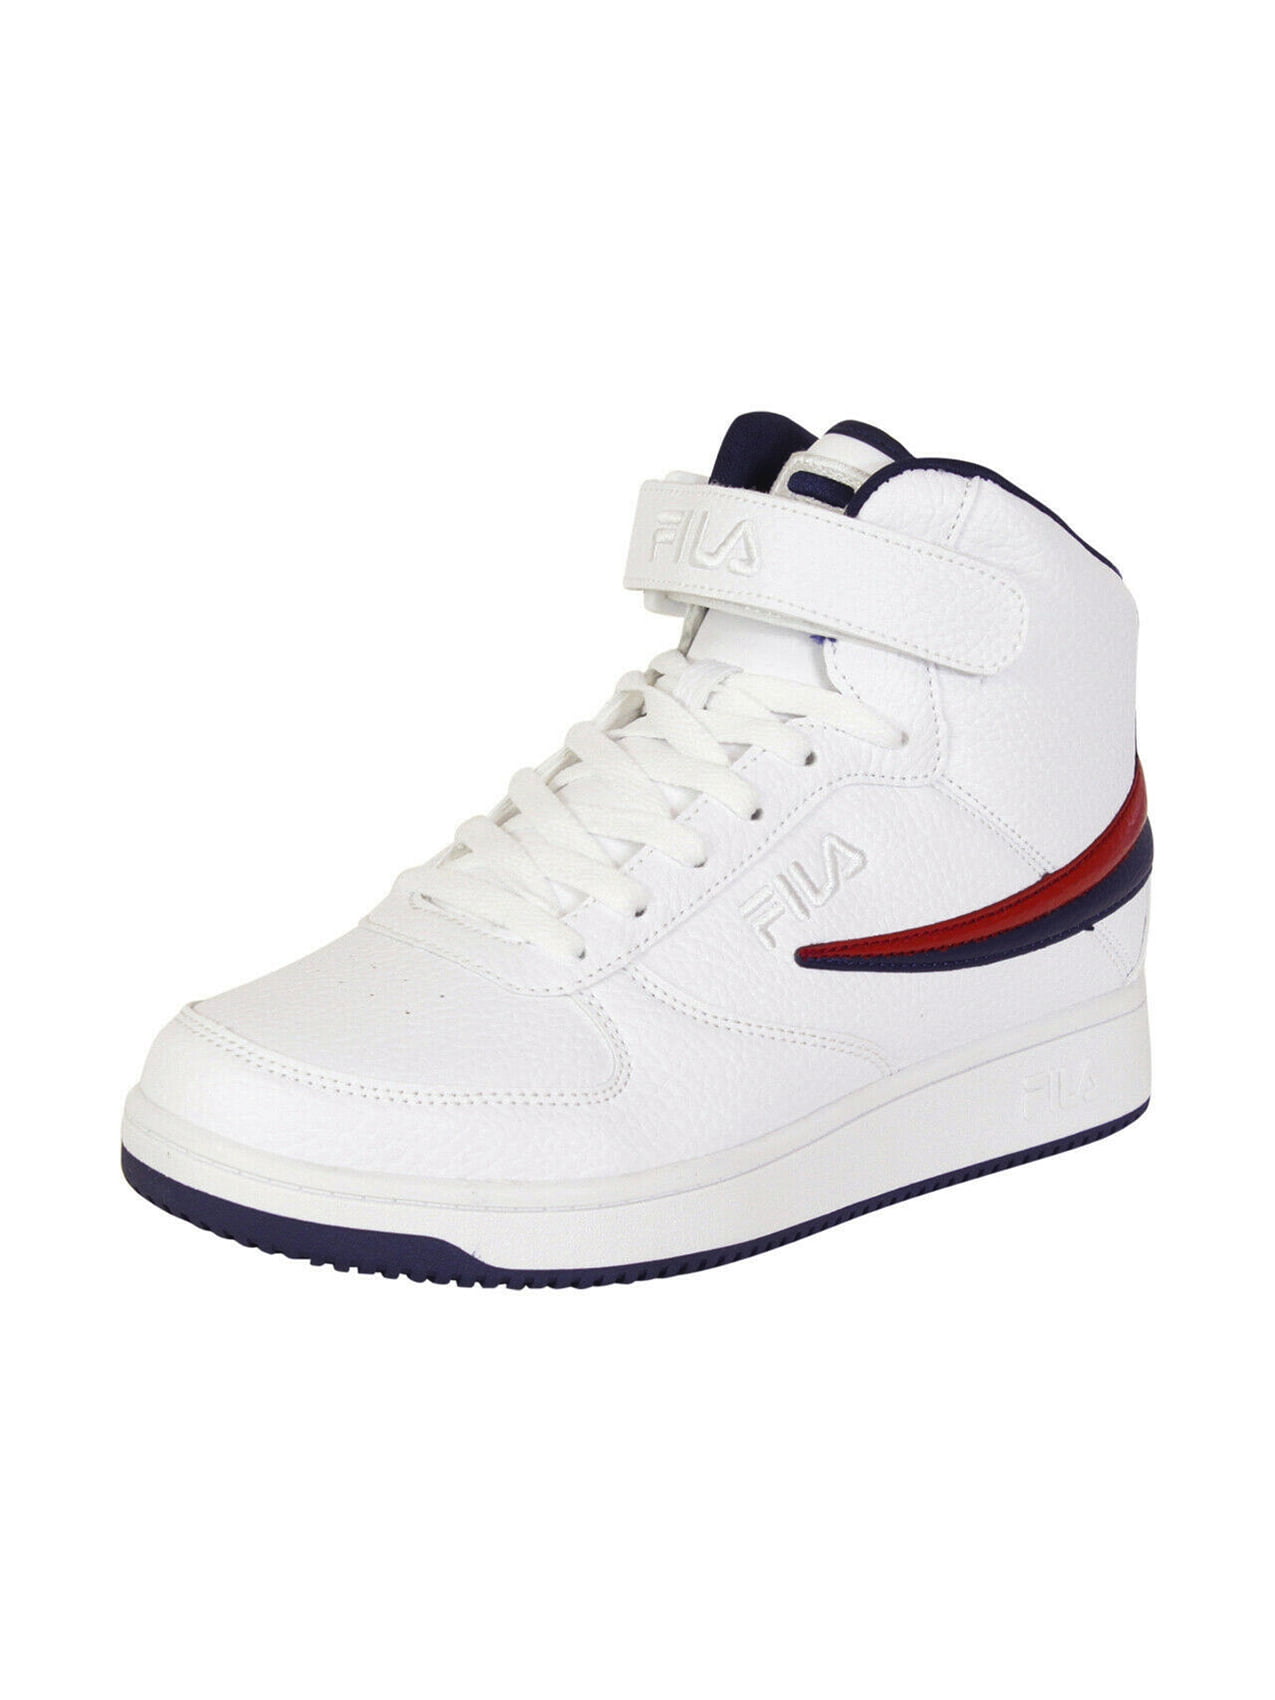 FILA - Fila Mens A-High Leather Sneakers Hi Top Shoes White - Walmart